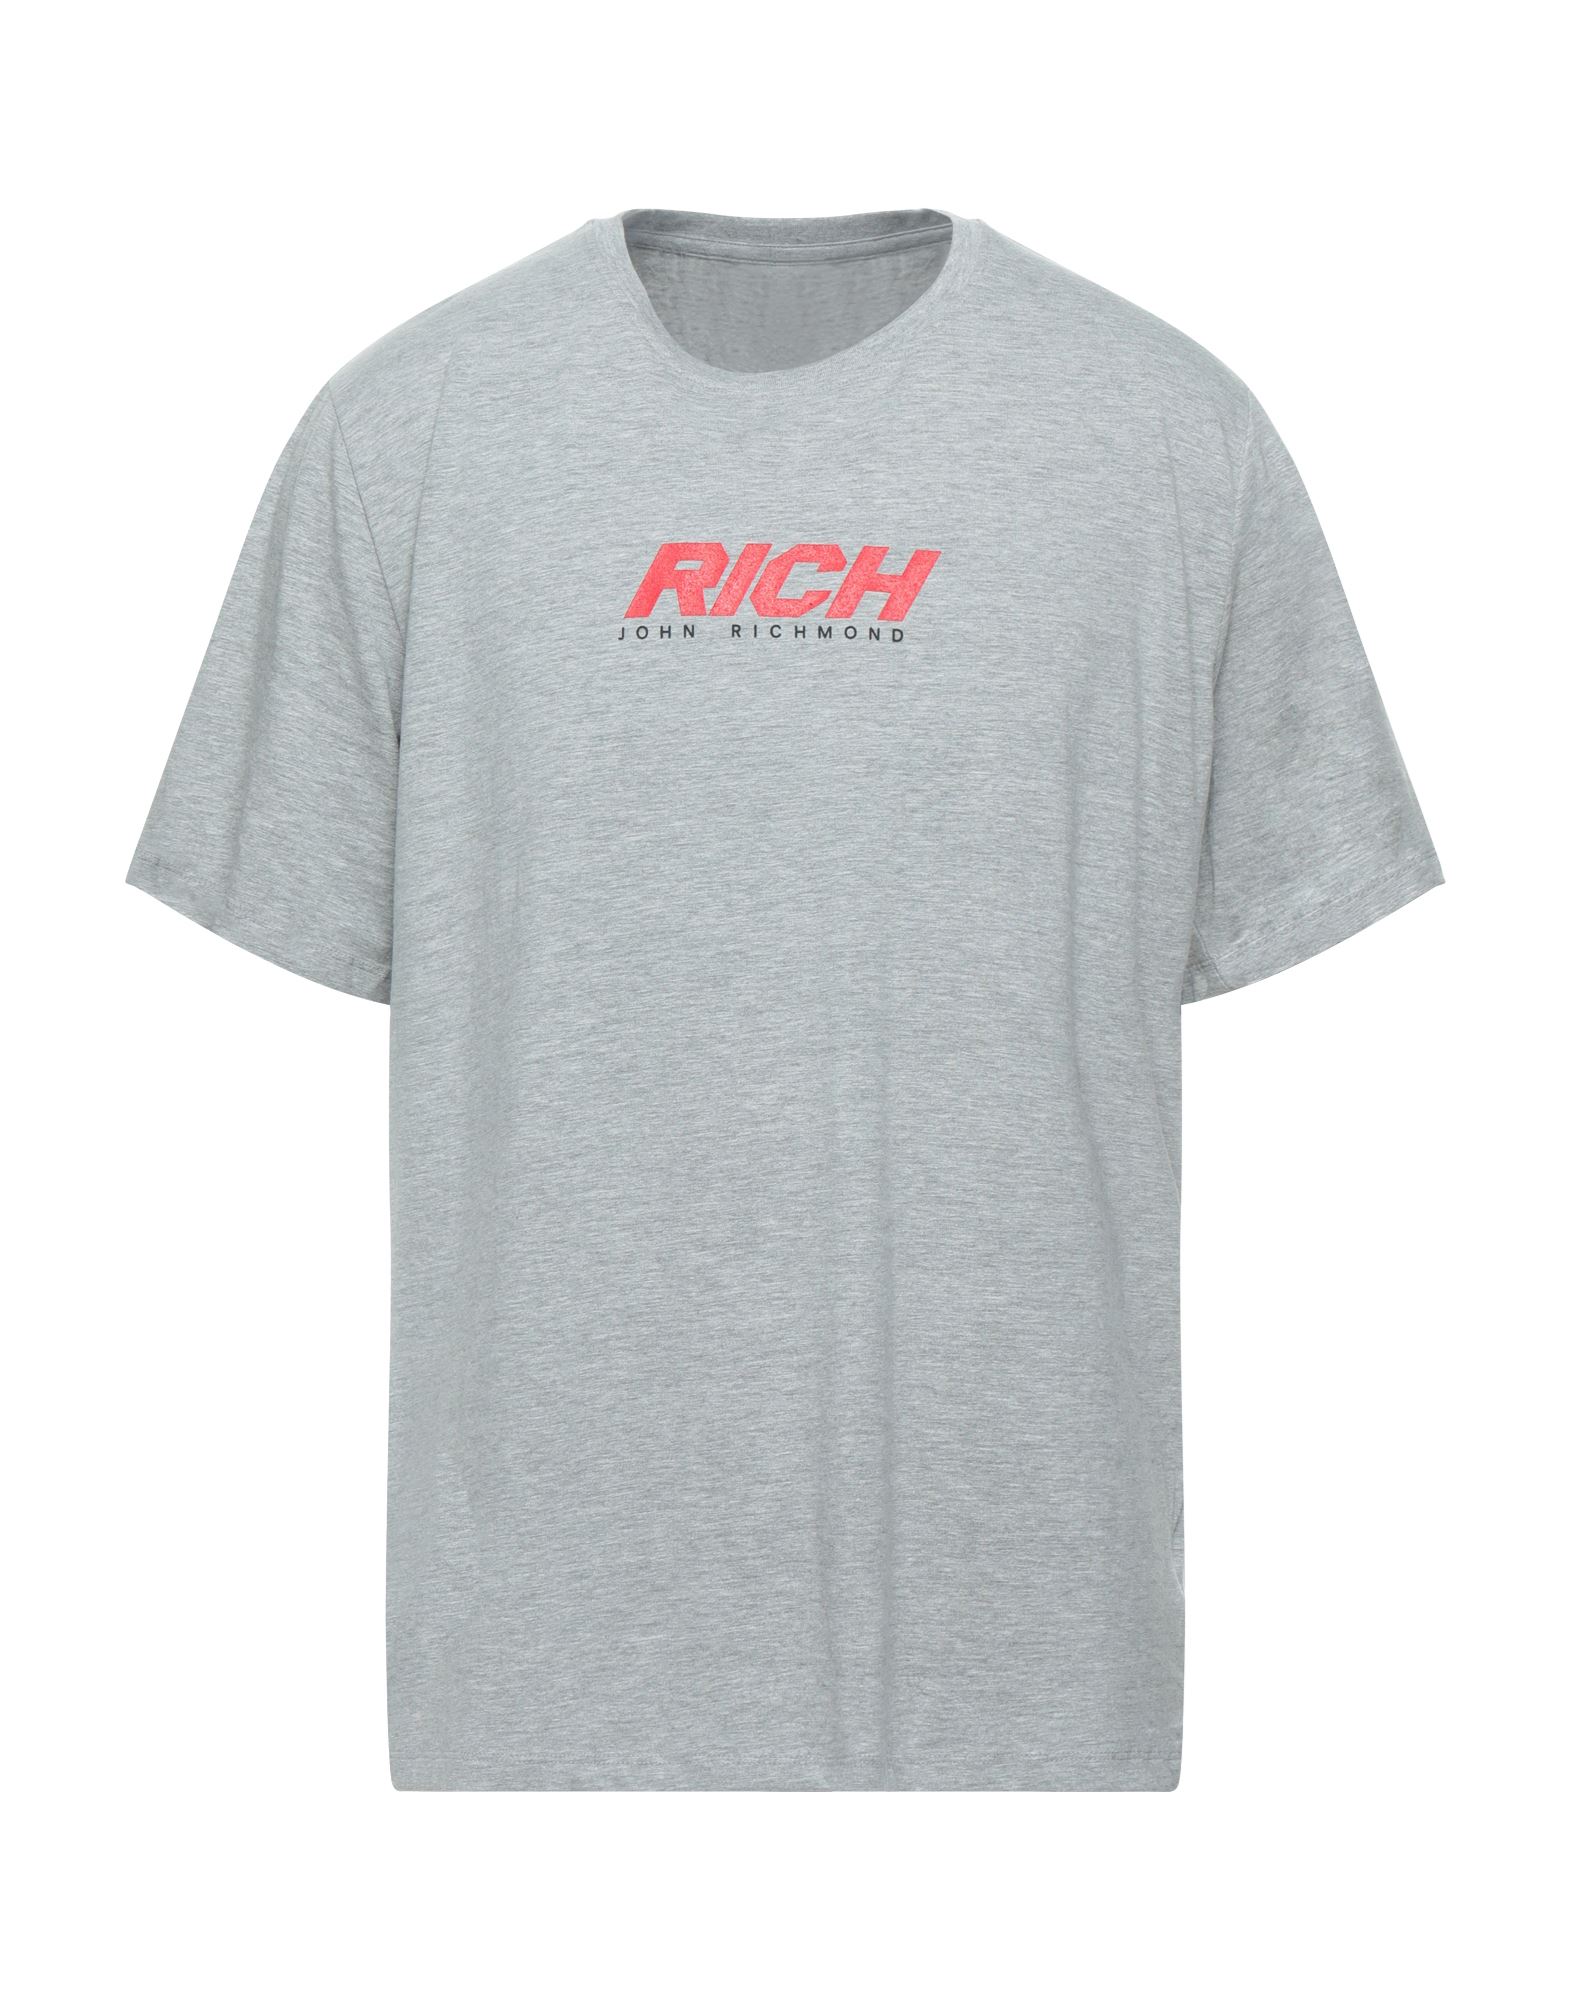 John Richmond T-shirts In Light Grey